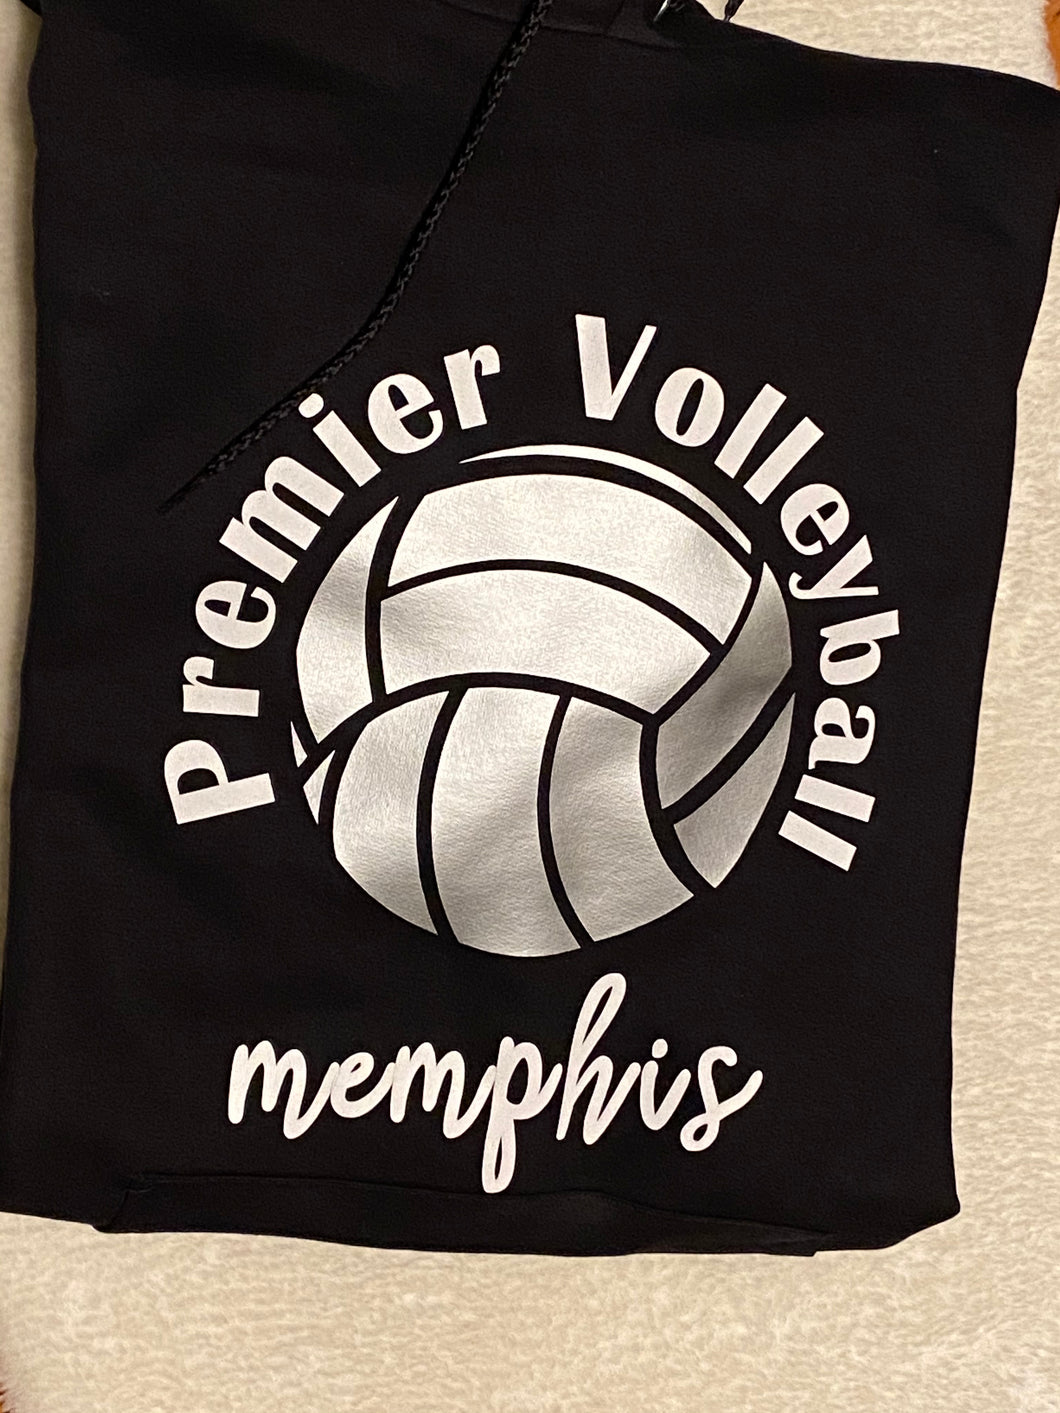 Premier Volleyball Memphis